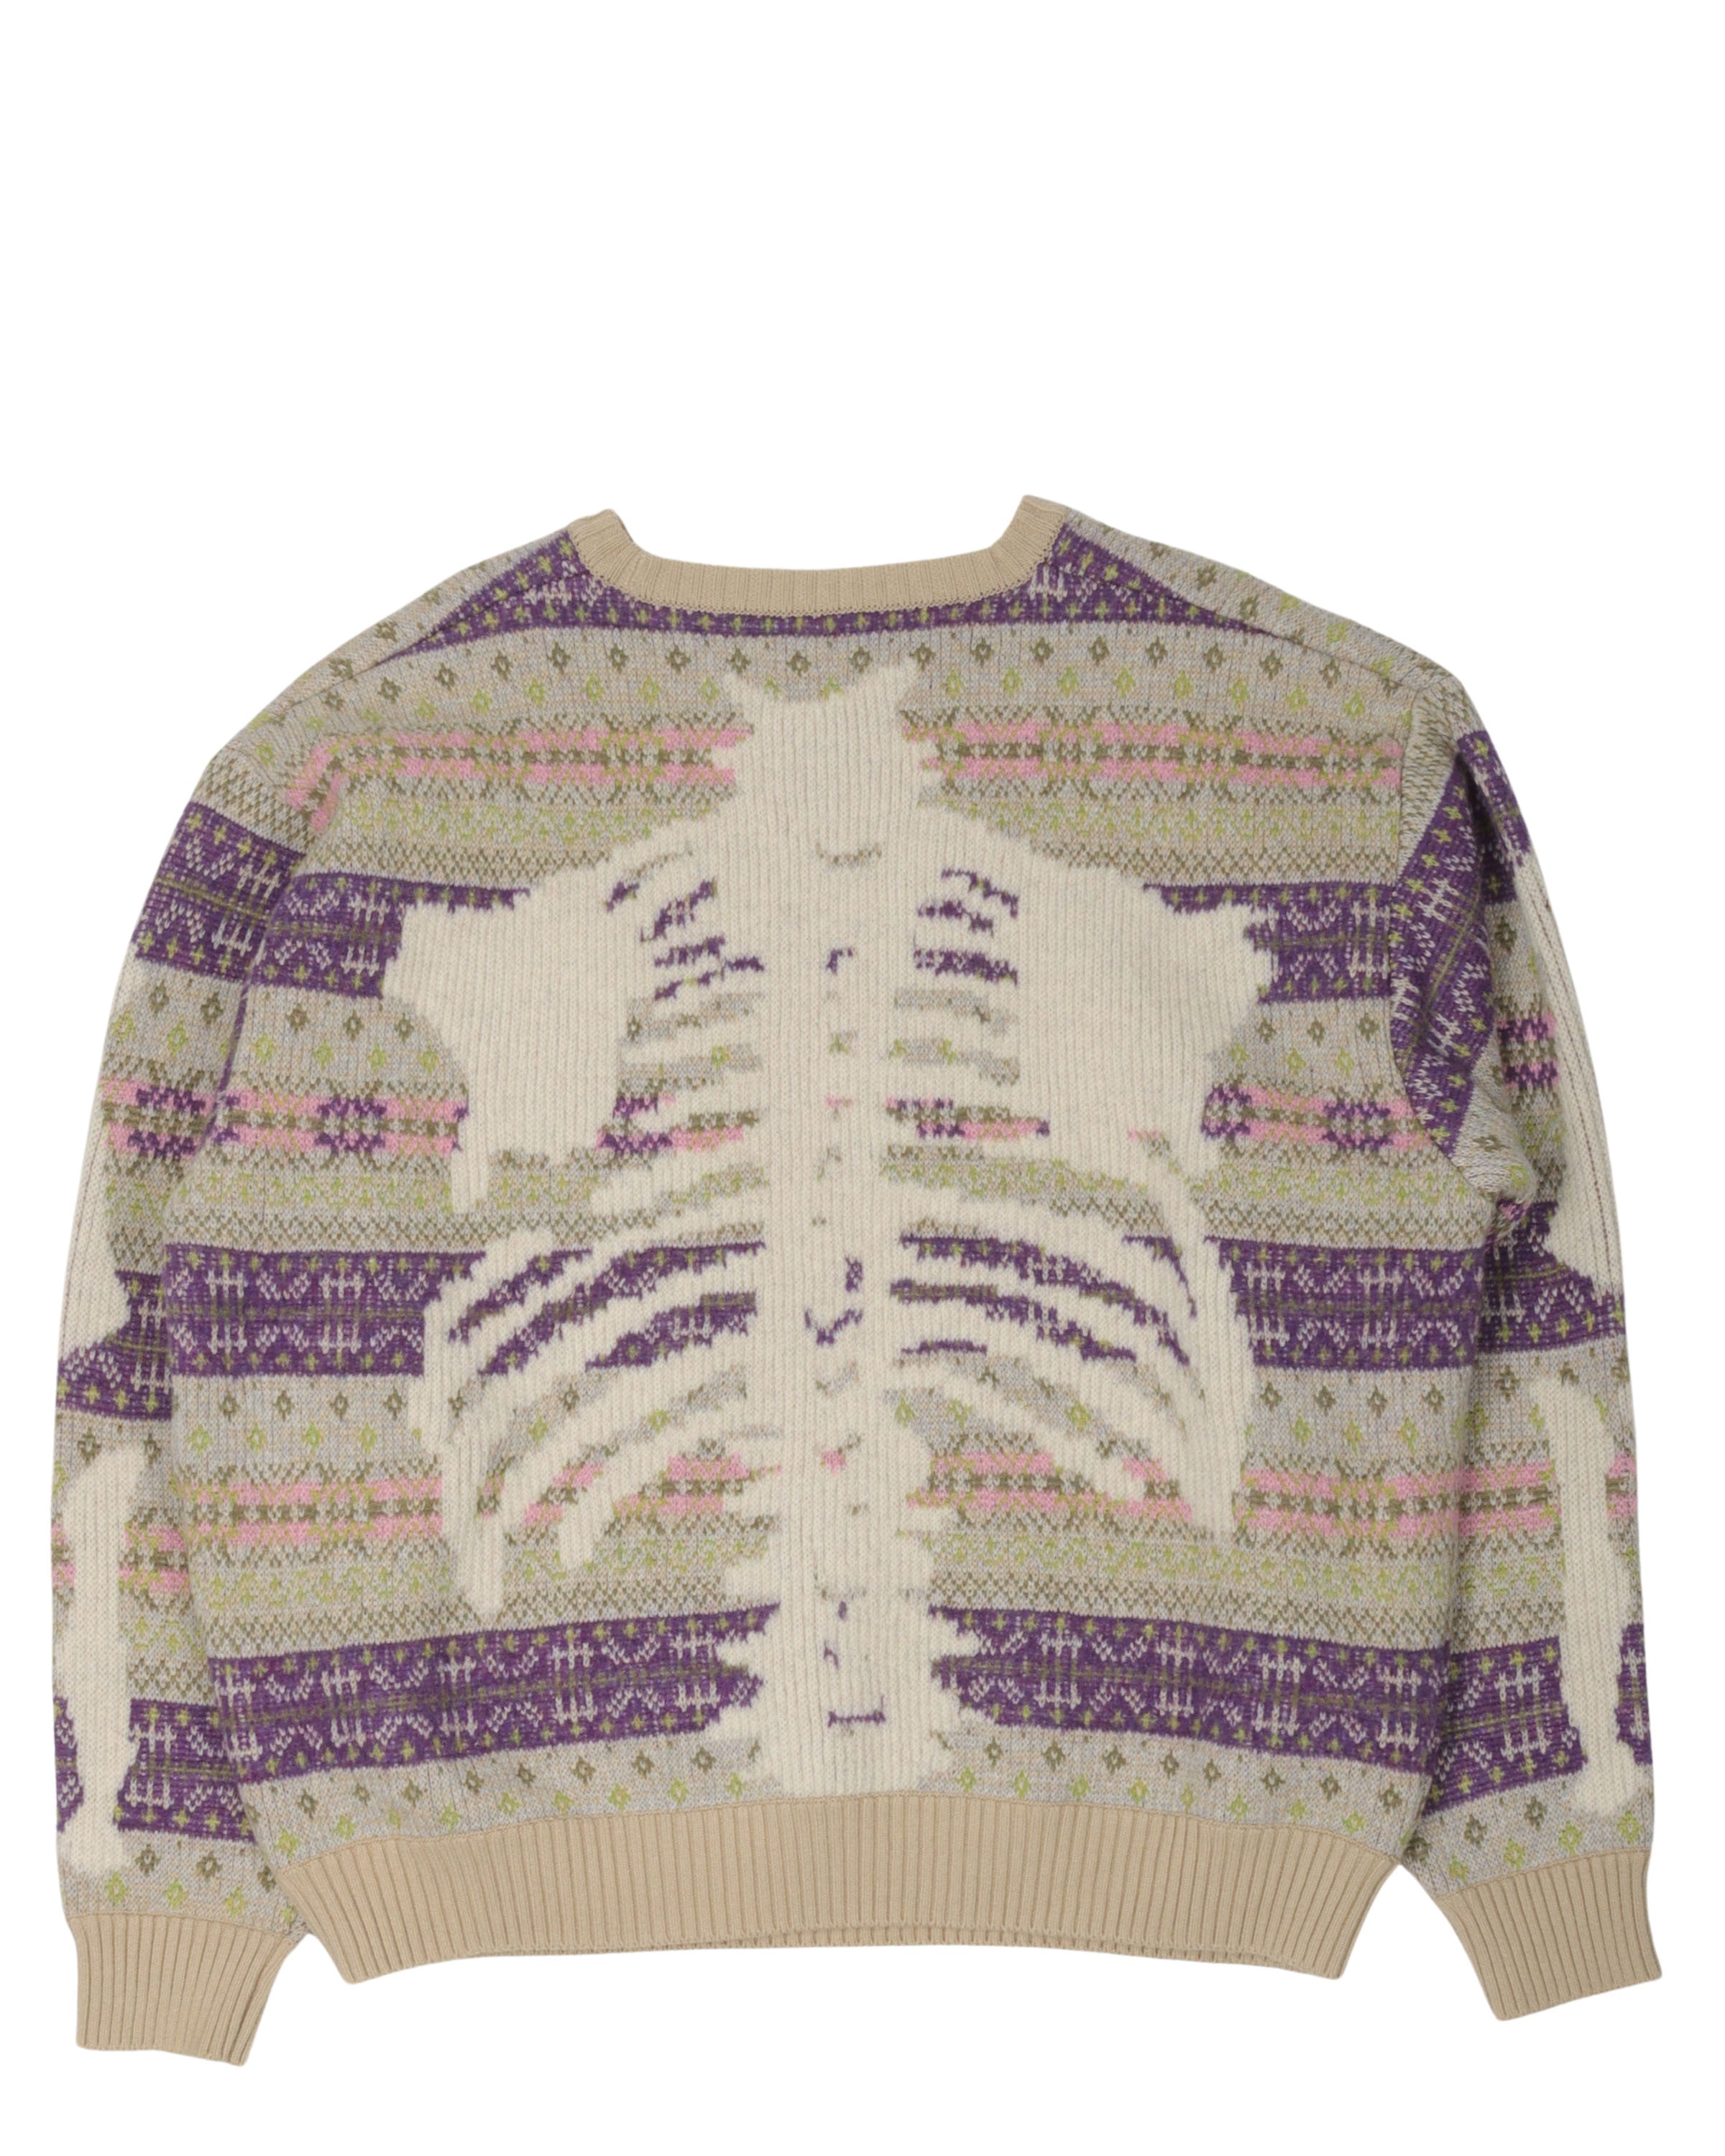 Intarsia Fair Isle Skeleton Sweater